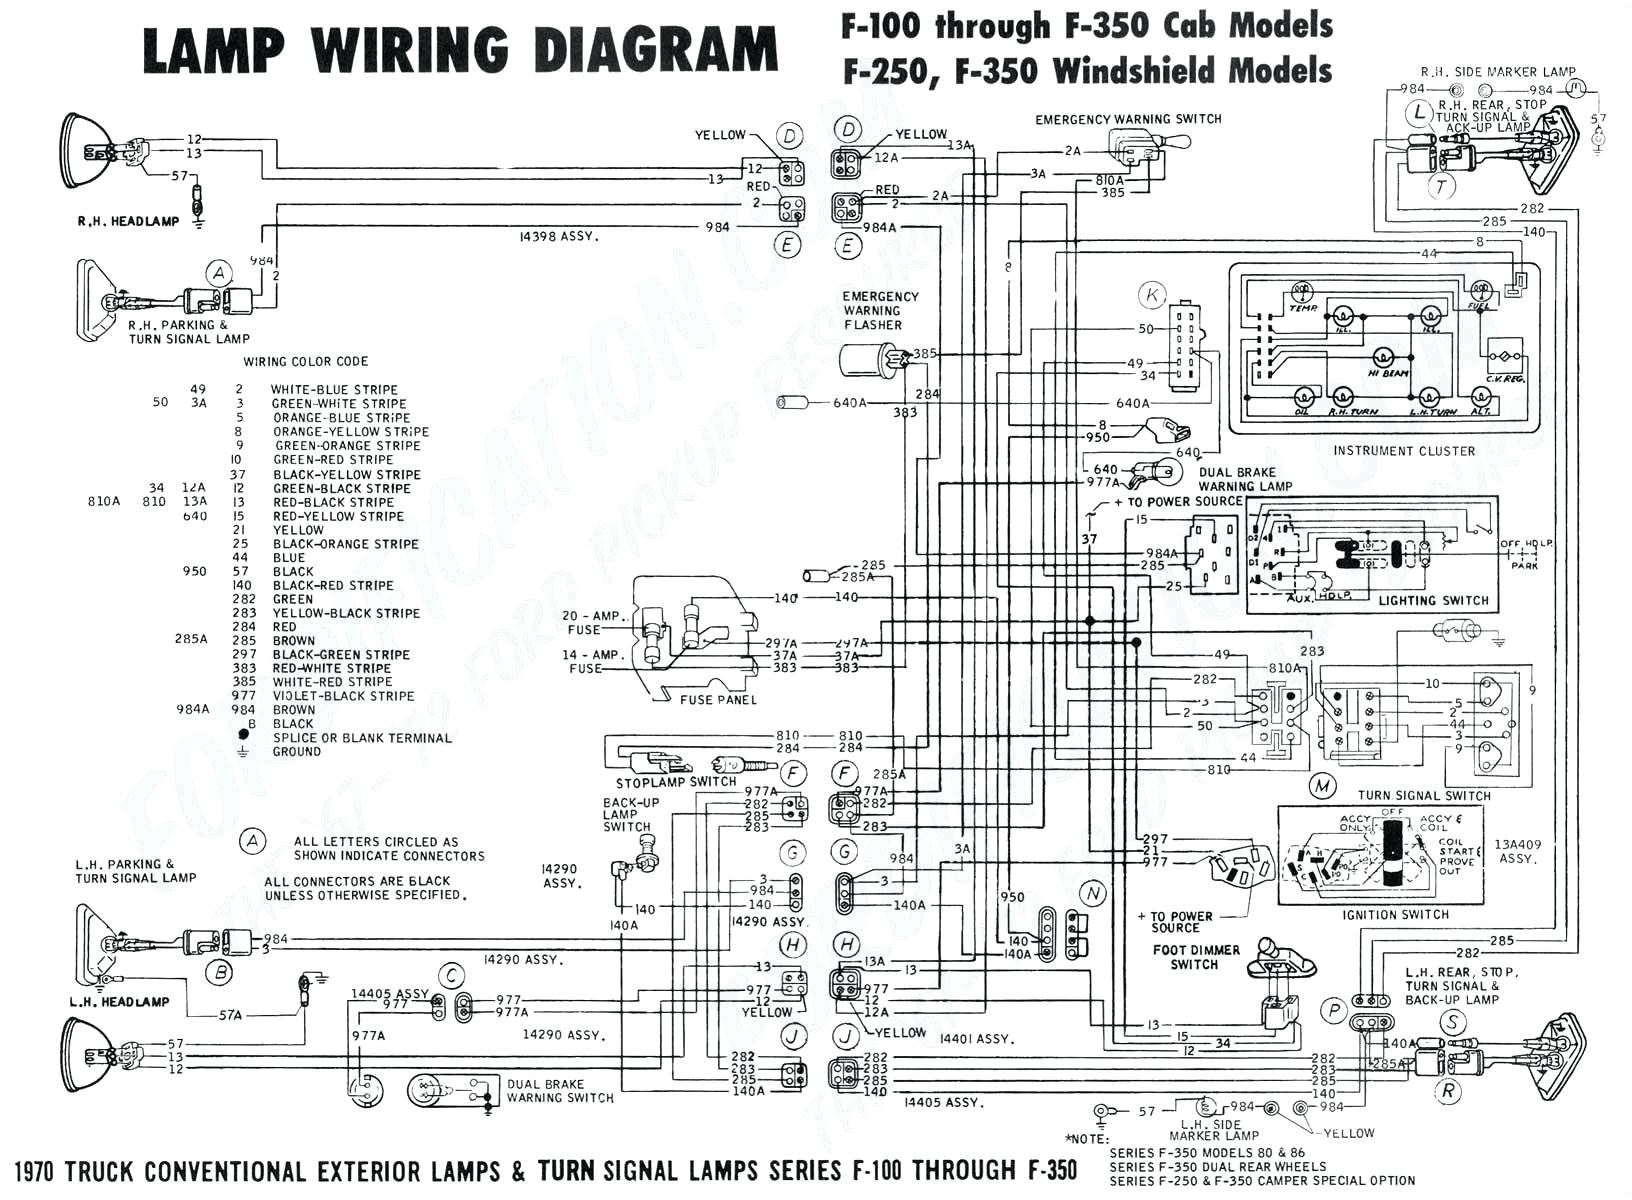 ach wiring diagram model 8 wiring diagrams value schematic wiring diagram ach 088